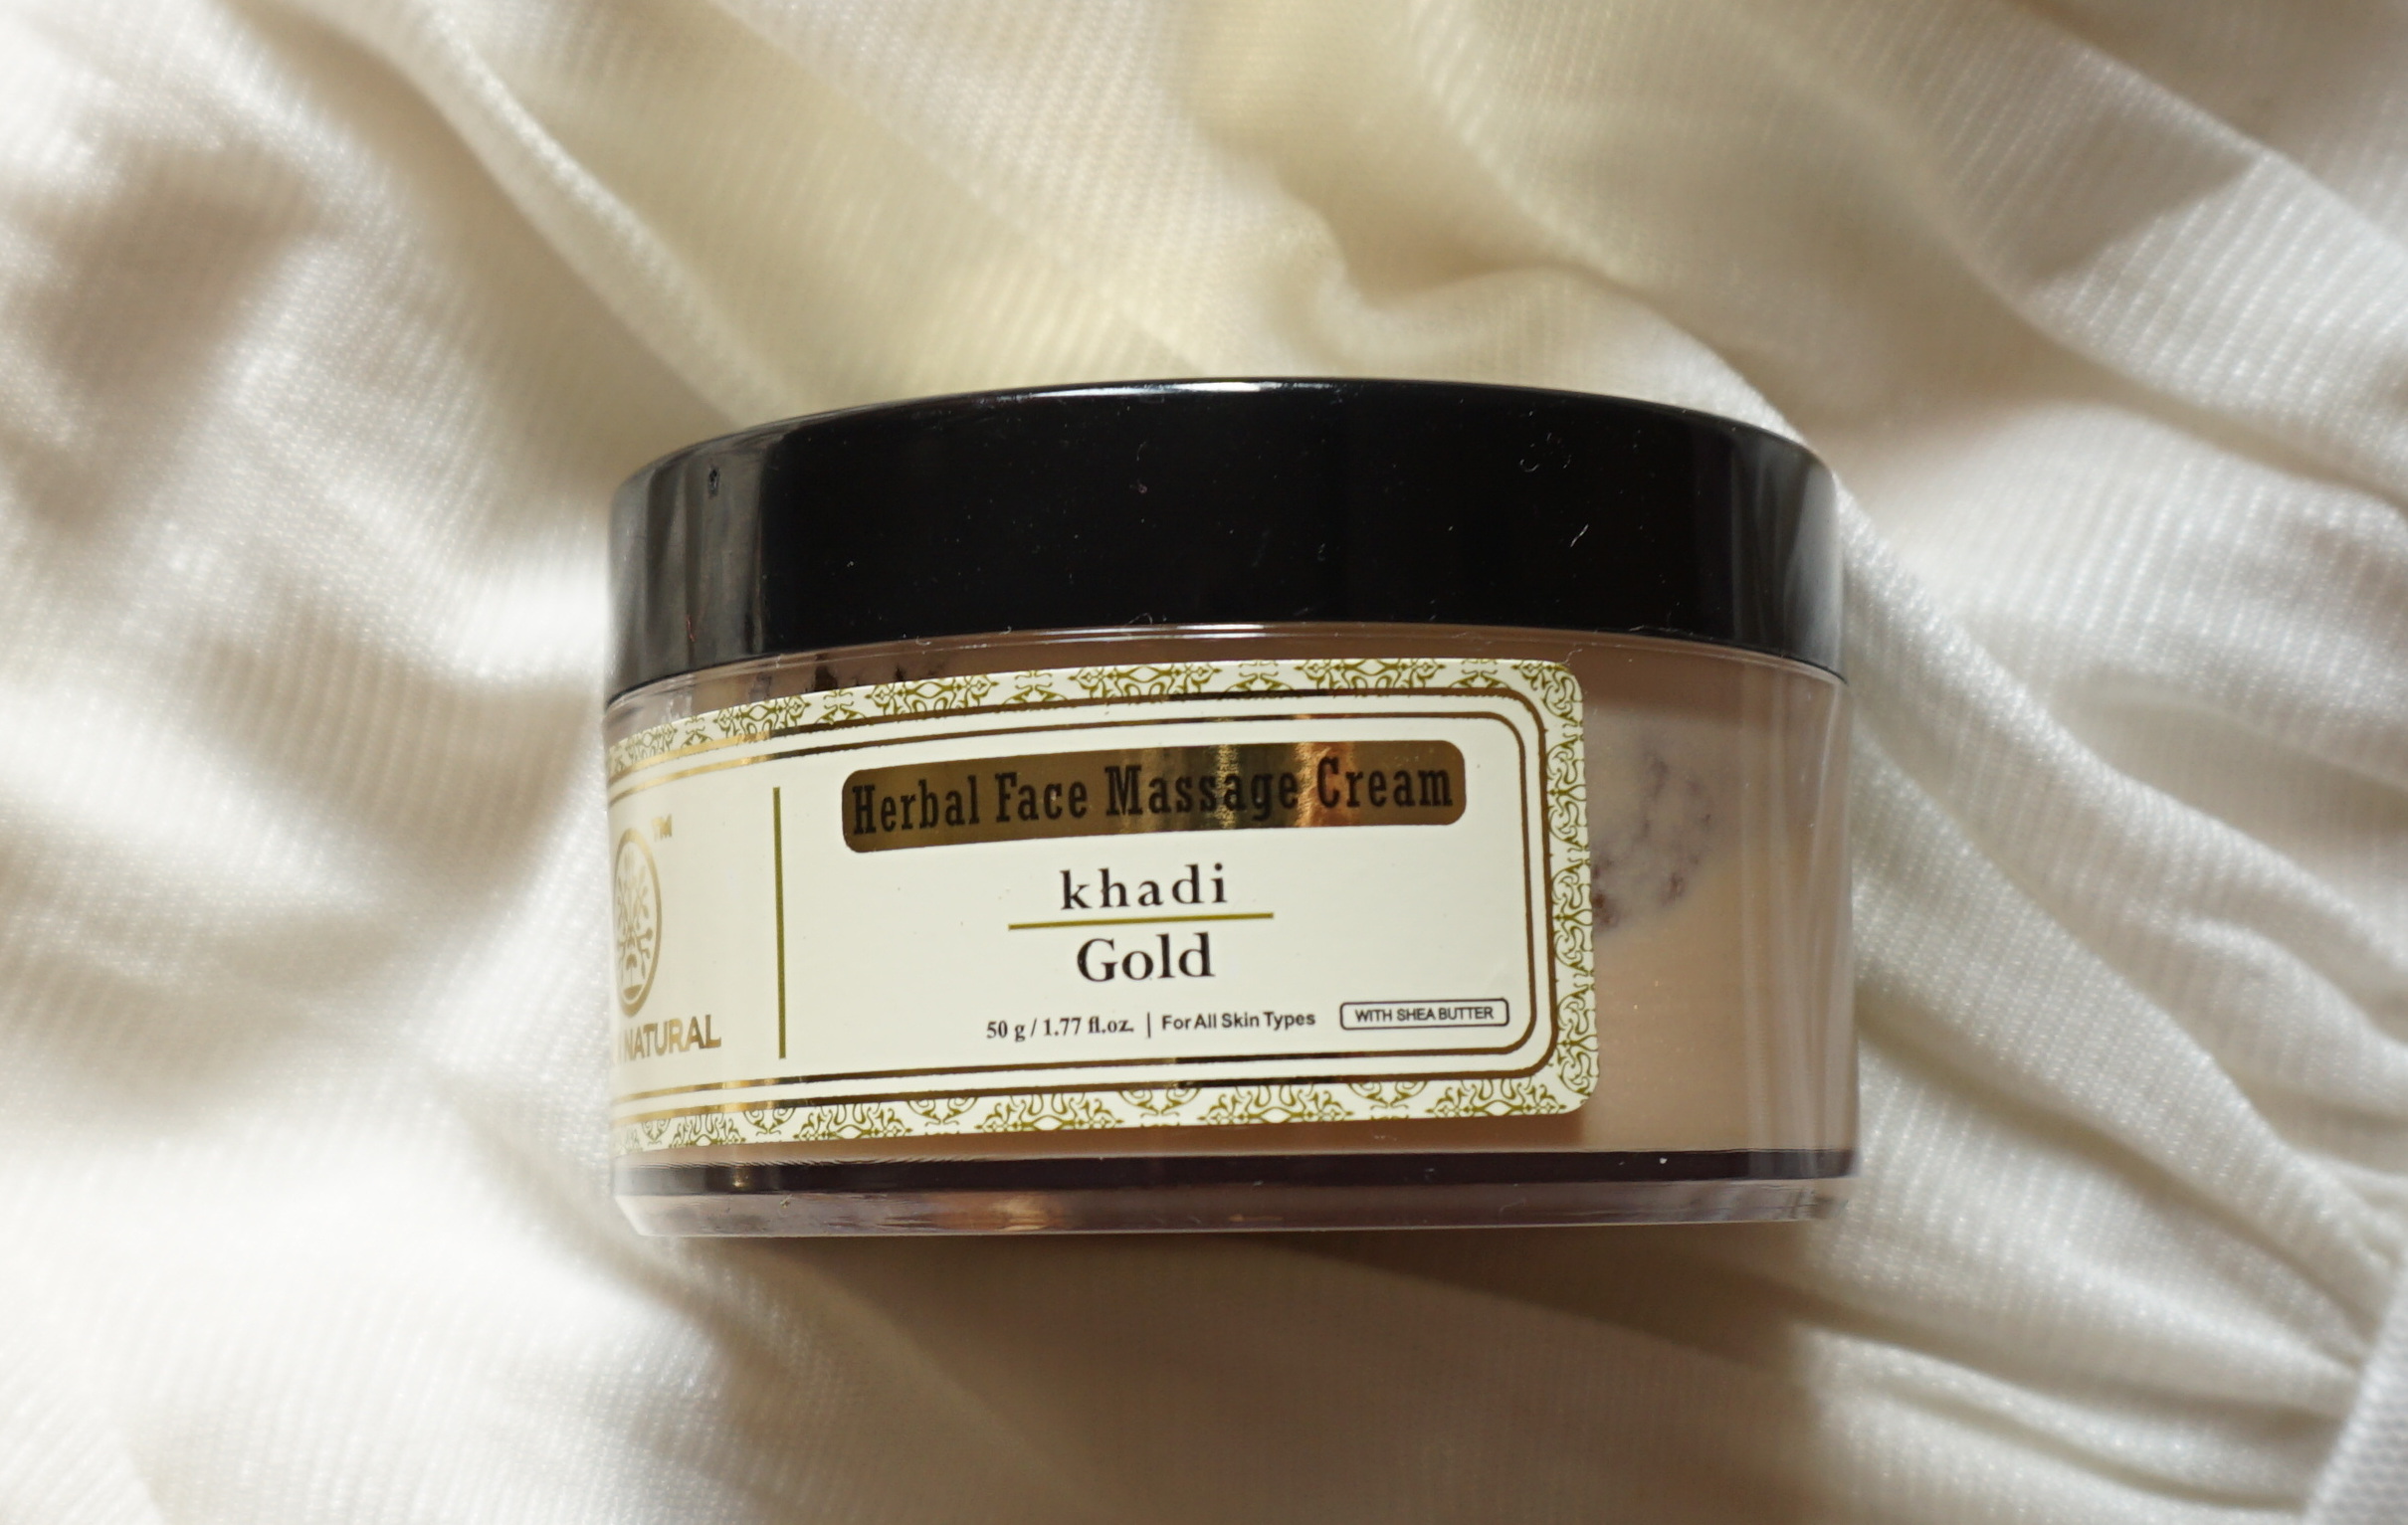 Khadi gold herbal massage cream review